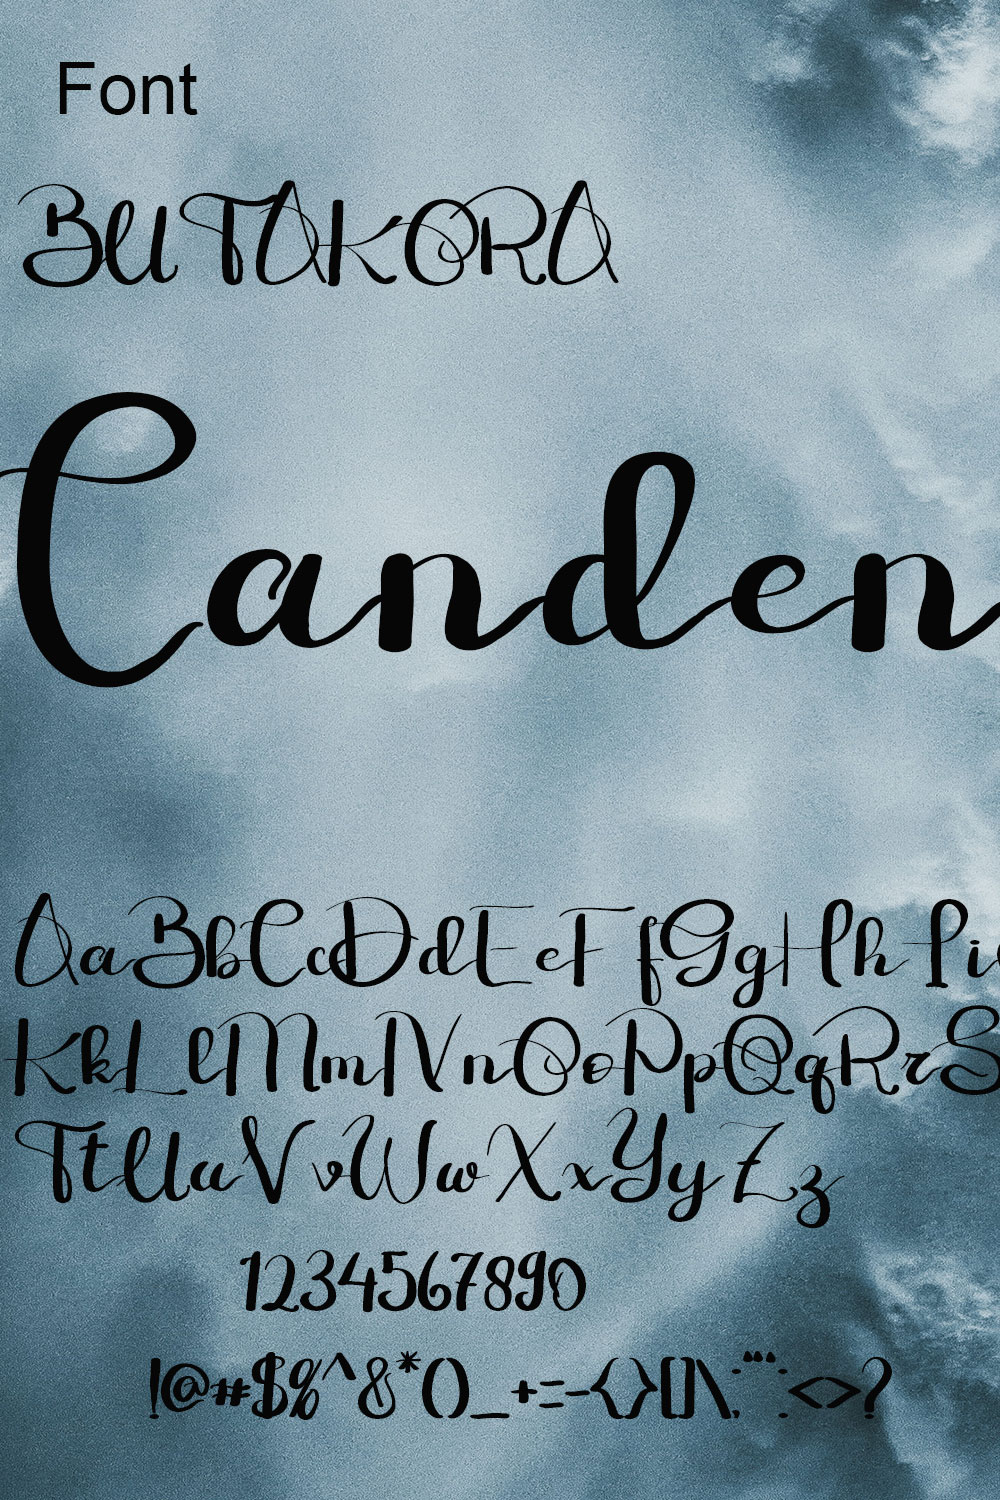 BUTAKORA Handwritten Typeface - Only $12 pinterest image.